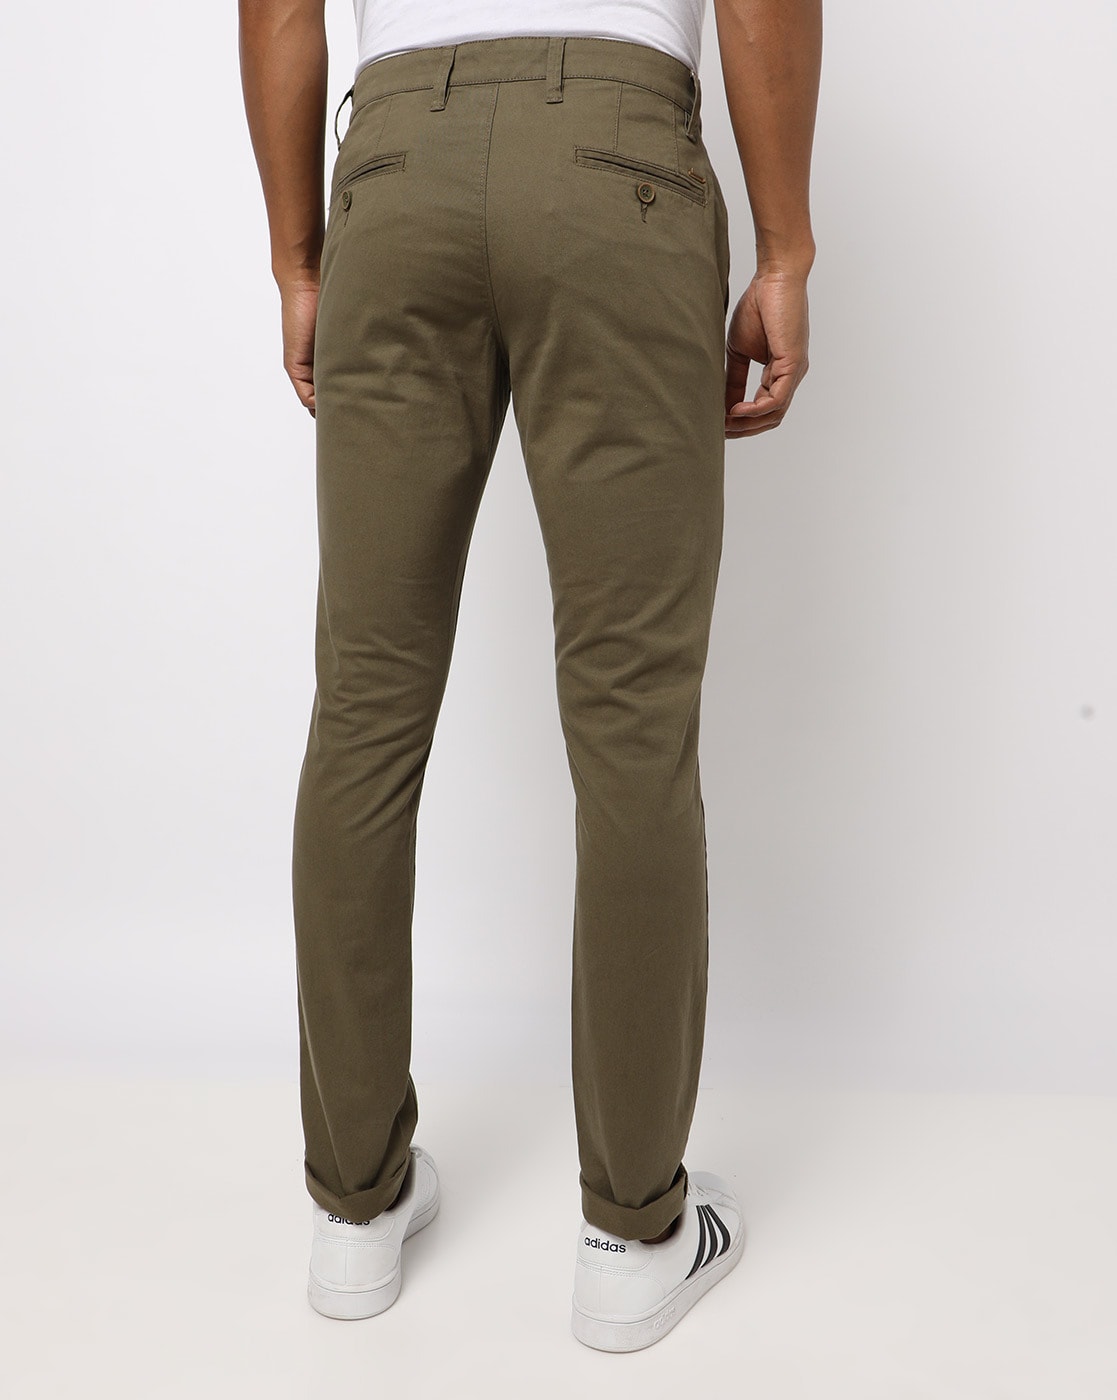 SingleRoad Mens Cargo Pants Men Fashion 2020 Baggy Korean Style Joggers Hip  Hop Japanese Streetwear Trousers Green Pants For Men 1109 From Make08,  $50.14 | DHgate.Com